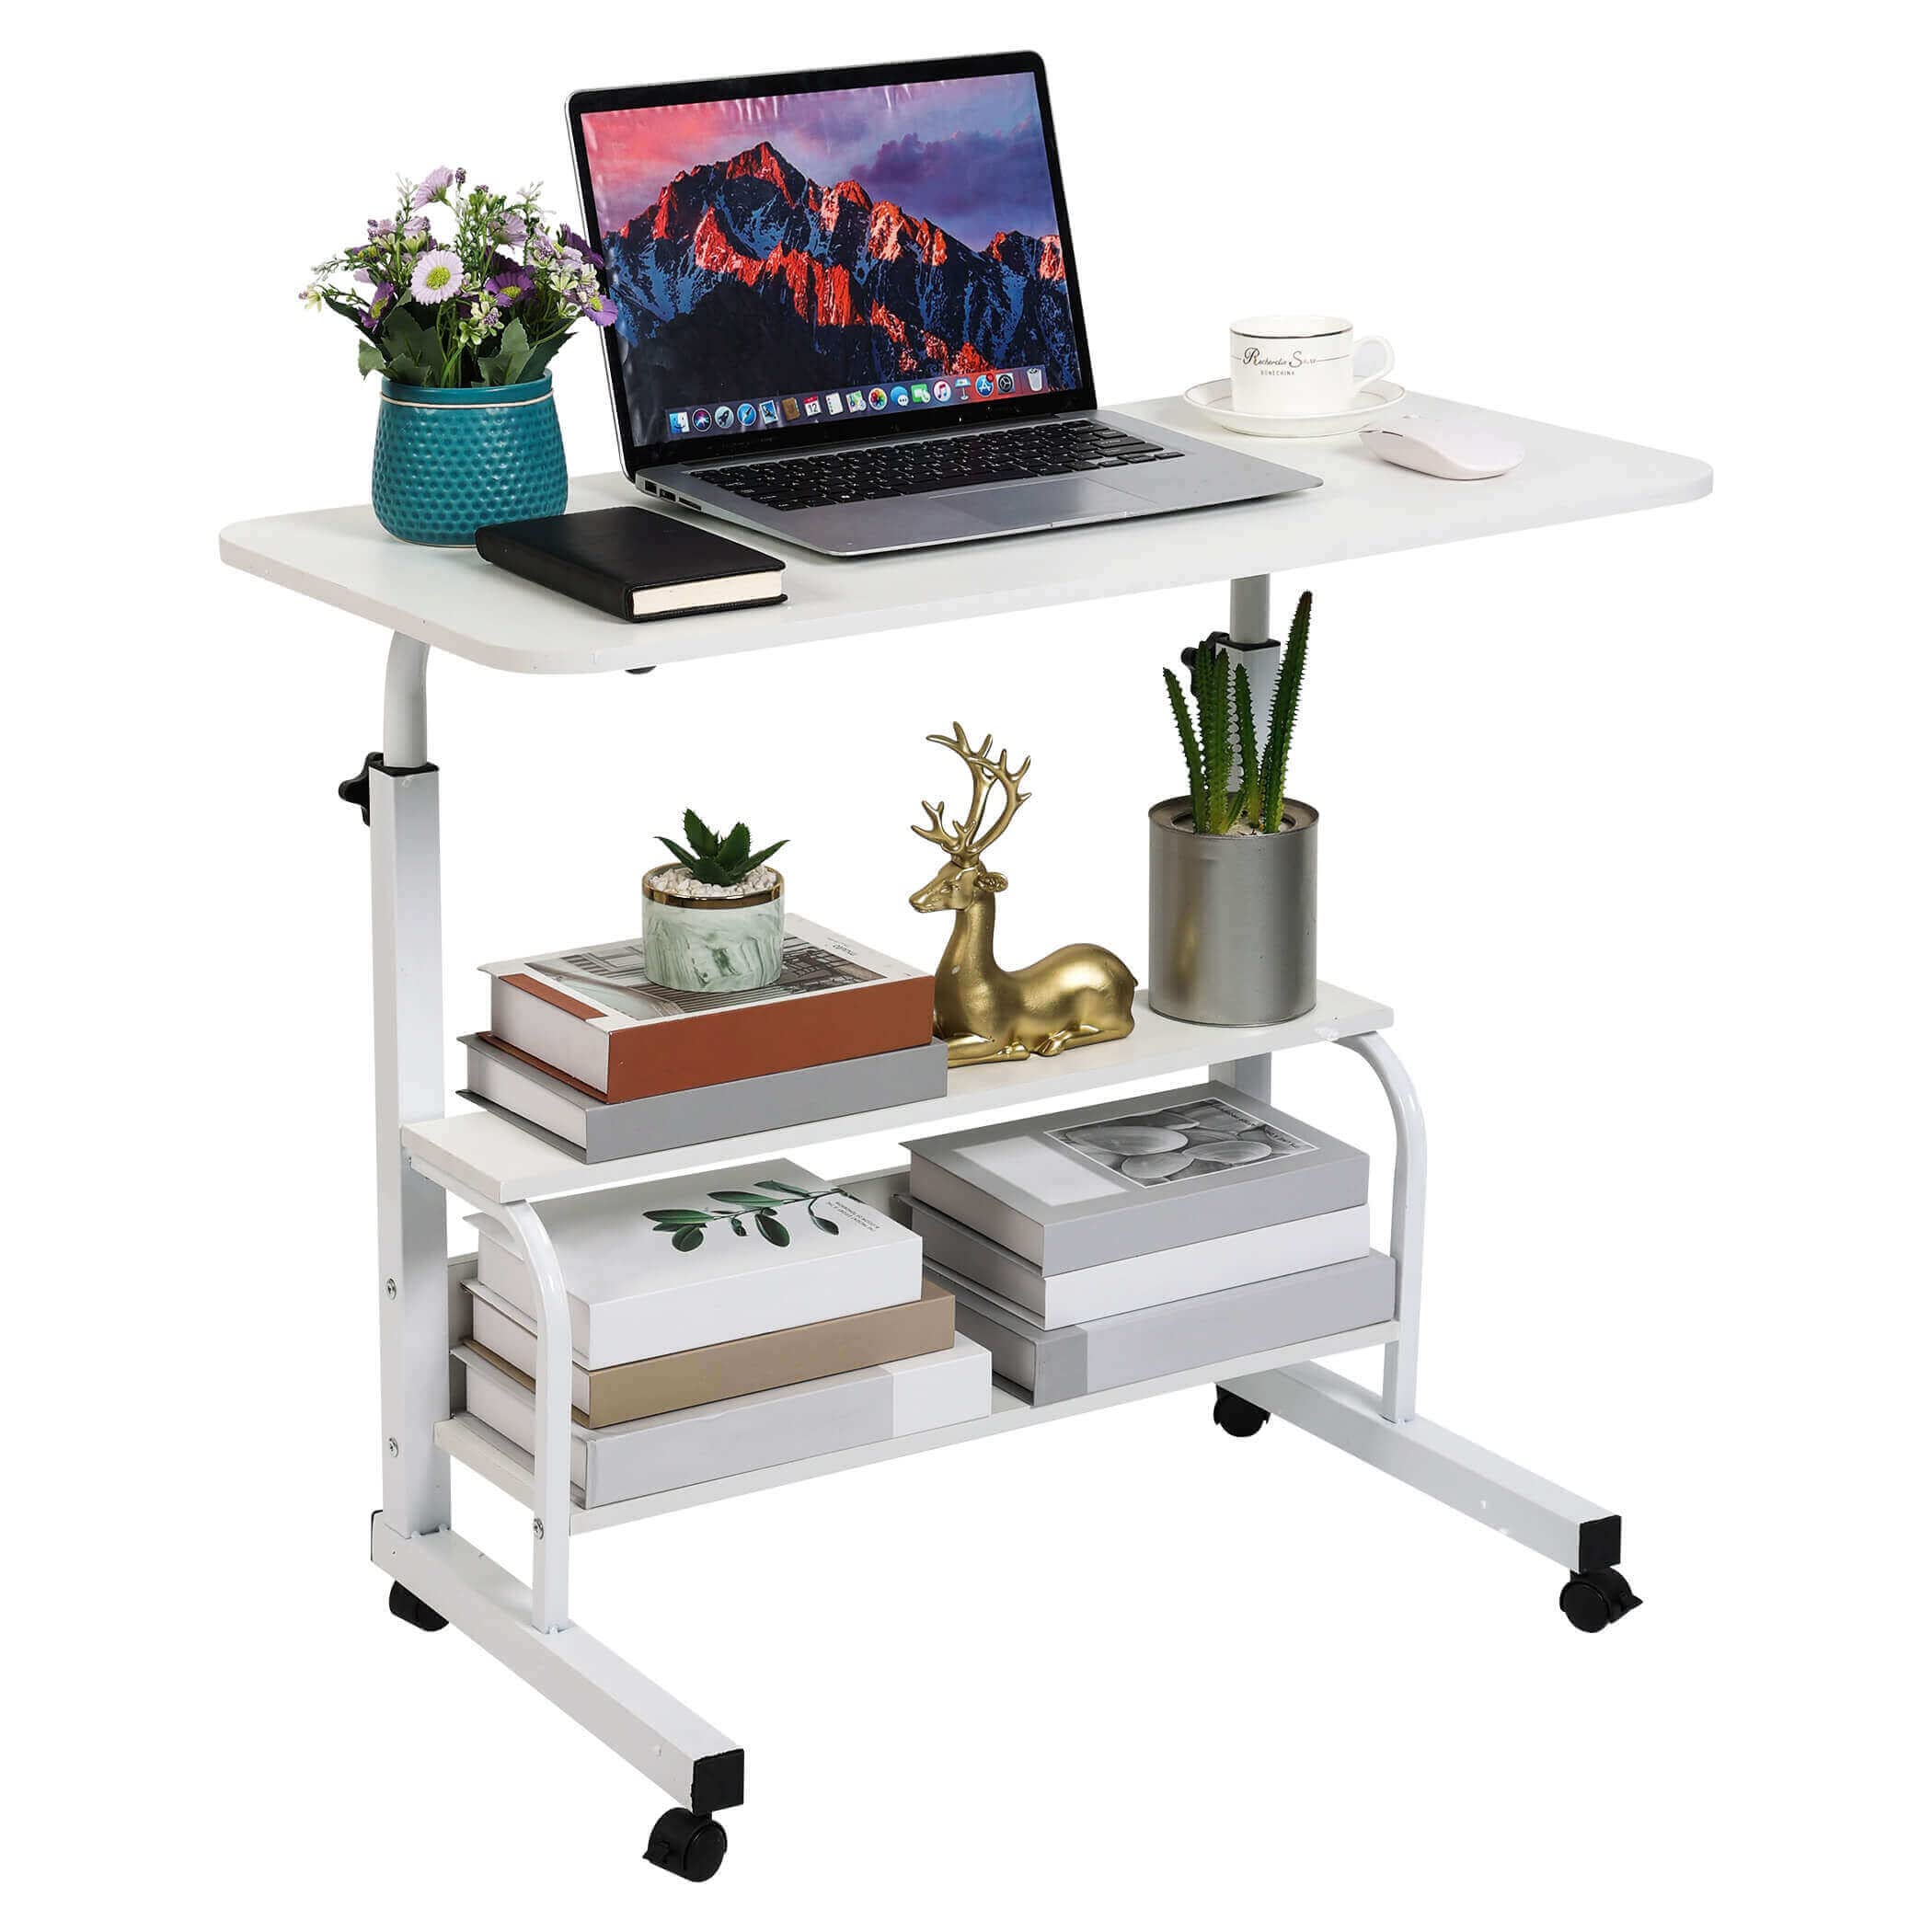 The Minimalist Laptop Desk